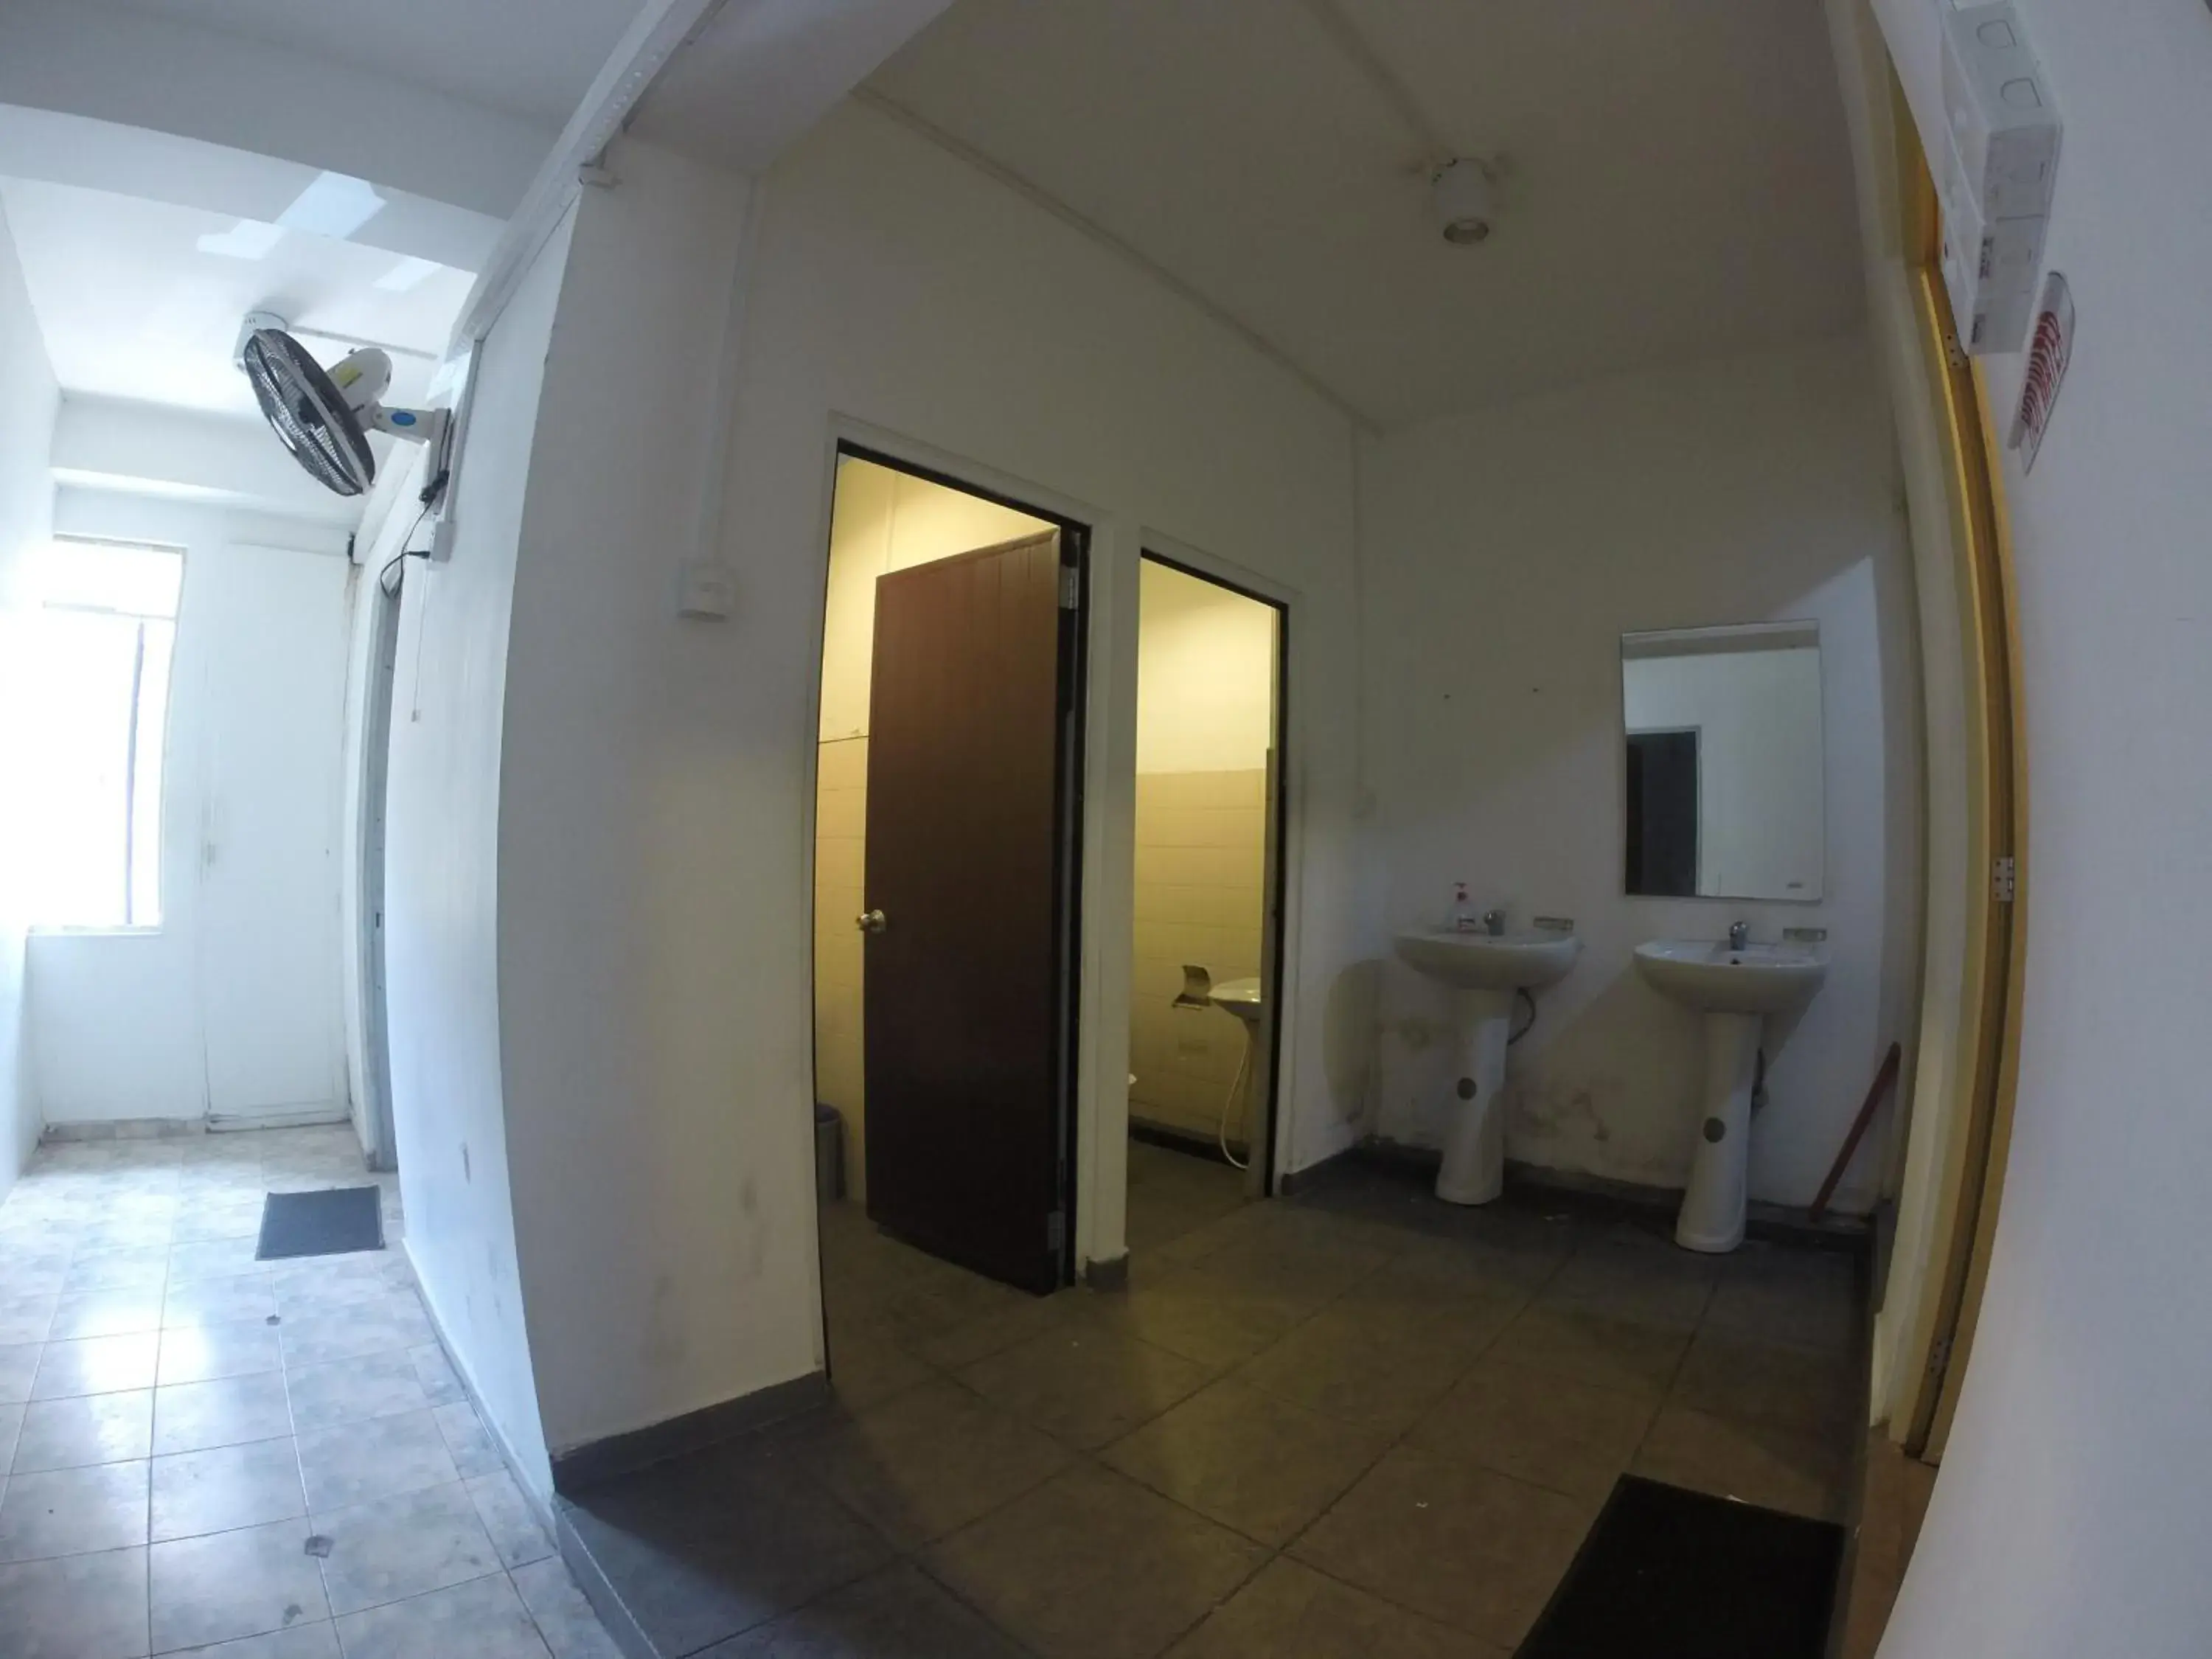 Other, Bathroom in Backpack Lanka